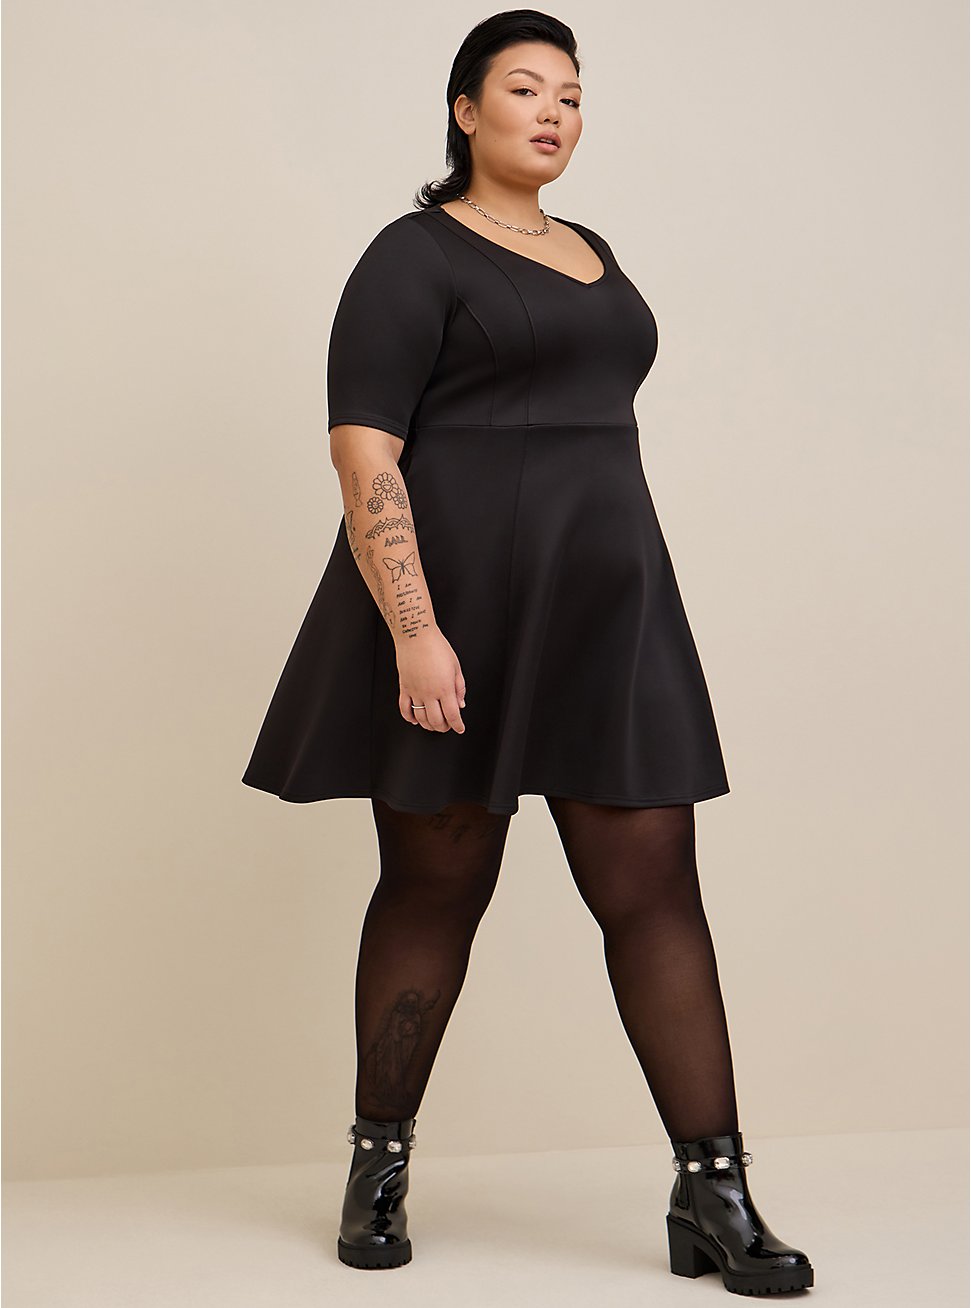 Plus Size Fluted Fit & Flare Mini Dress - Scuba Black, DEEP BLACK, hi-res